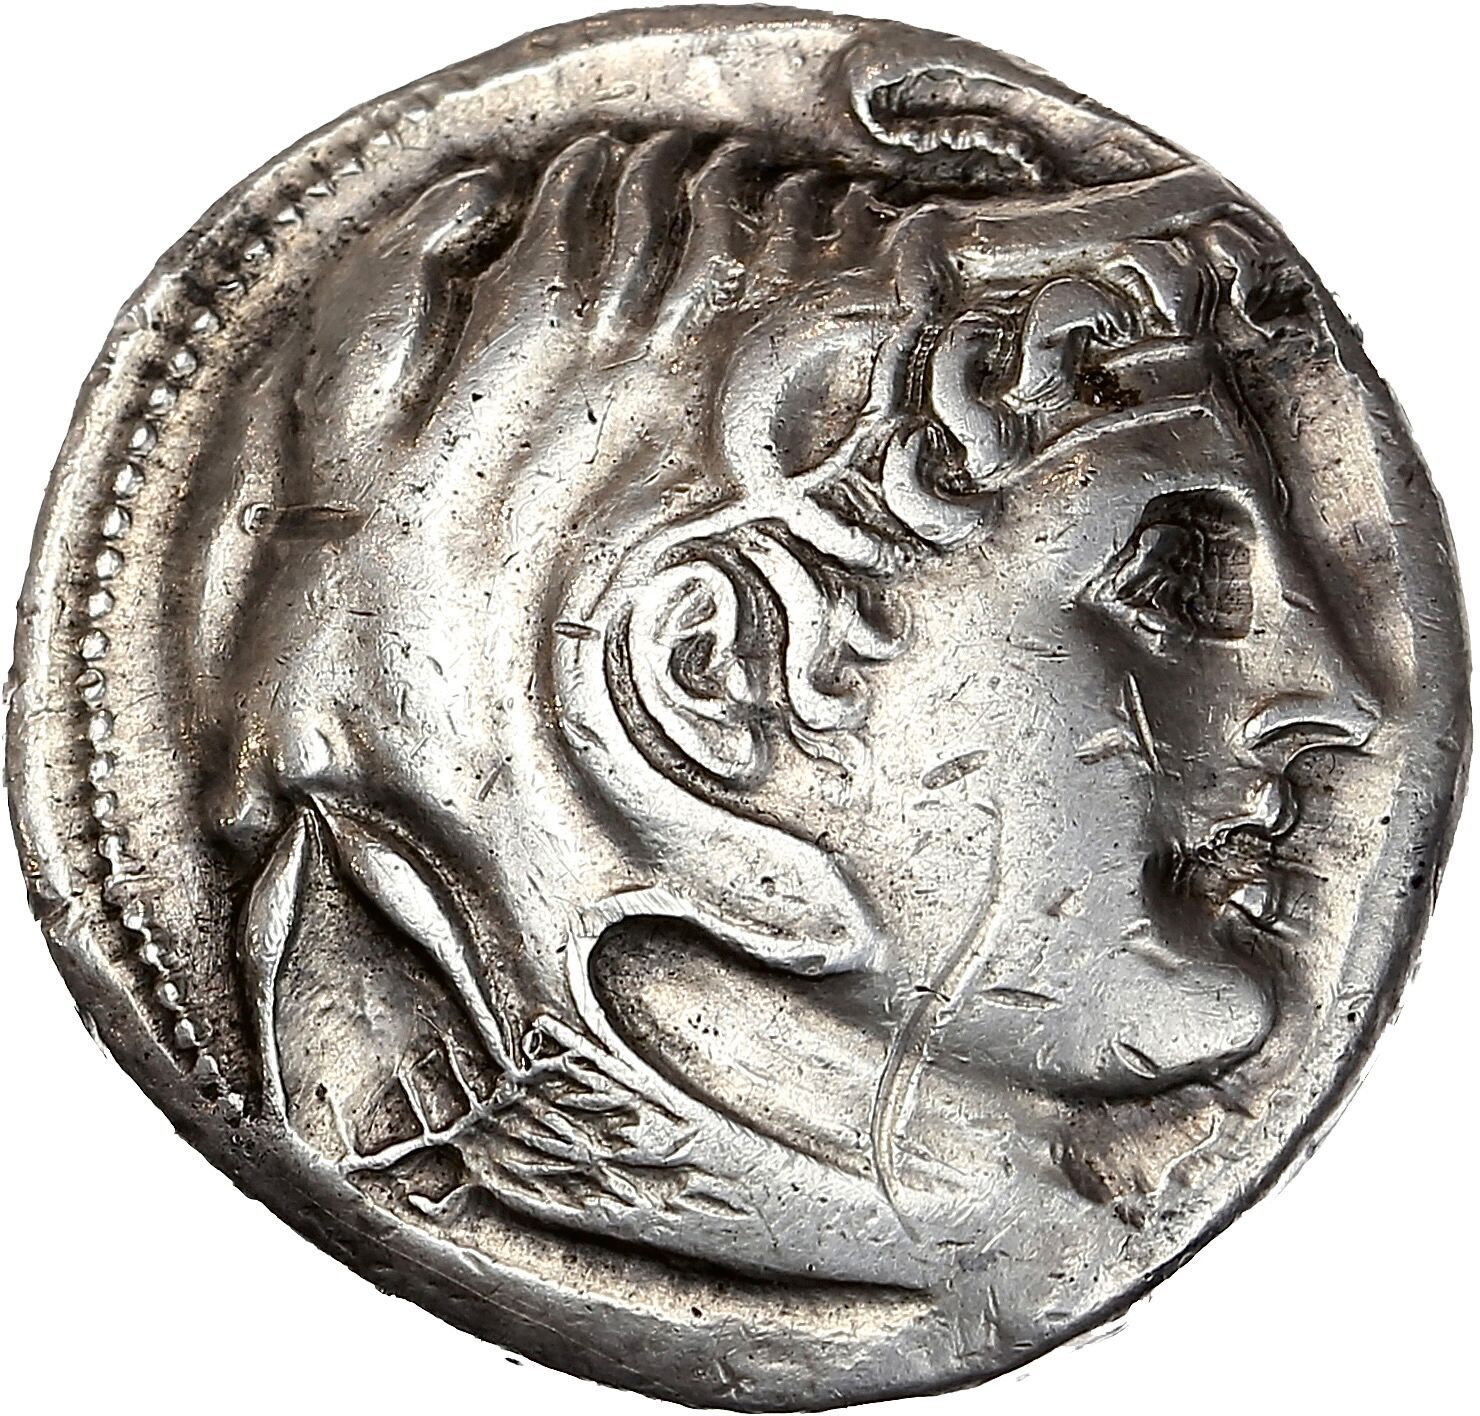 Null 埃及王国
托勒密一世-索特 (公元前323-285年)
四连体。15,64 g.
右边是亚历山大大帝的头像，穿着大象皮。
R/雅典娜向右行走。 
B.&hellip;